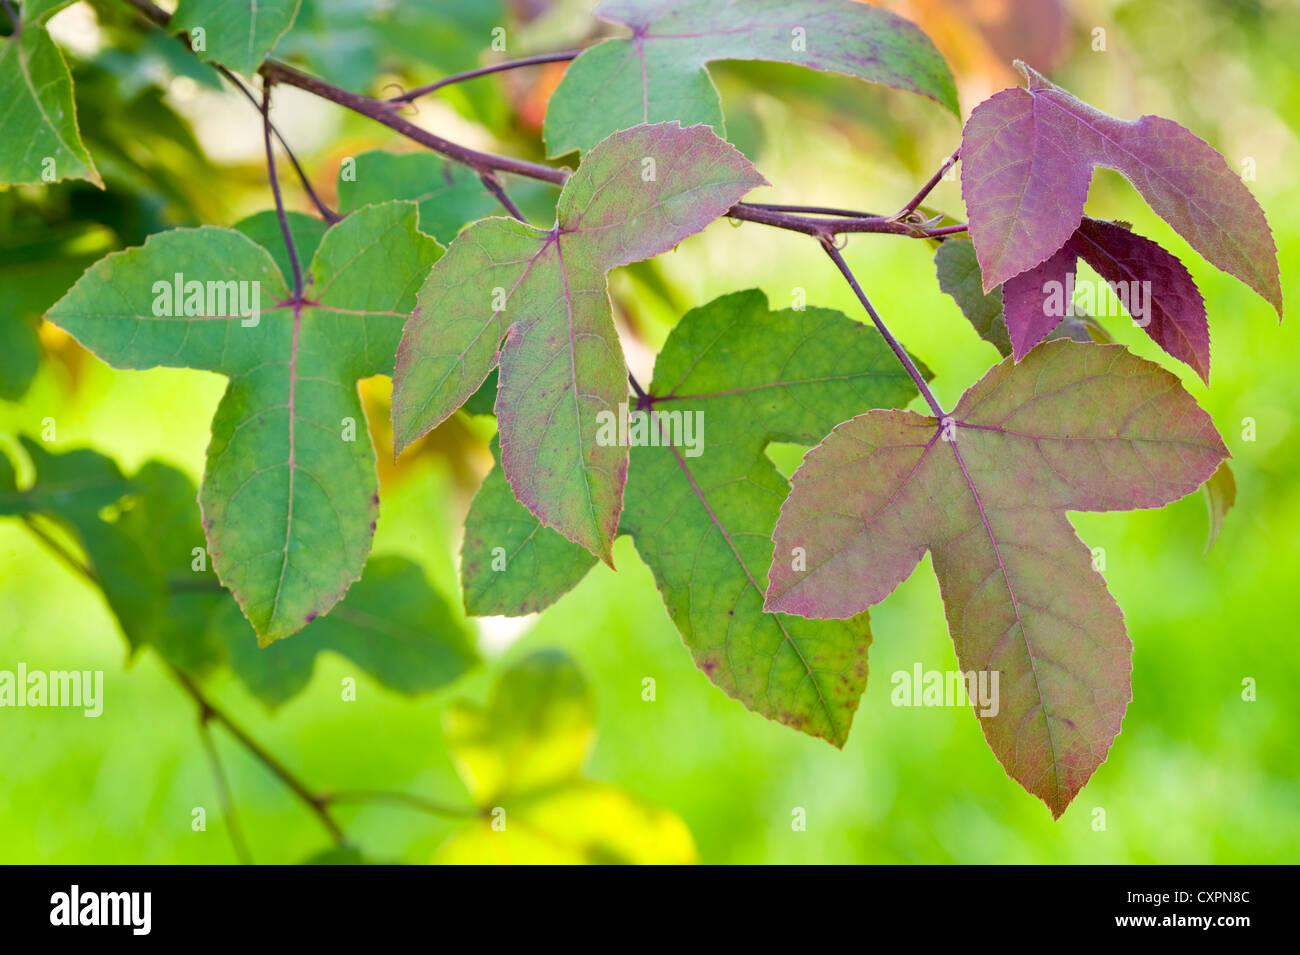 Liquidambar Styraciflua Acalycina leaves on a branch in early autumn Stock Photo